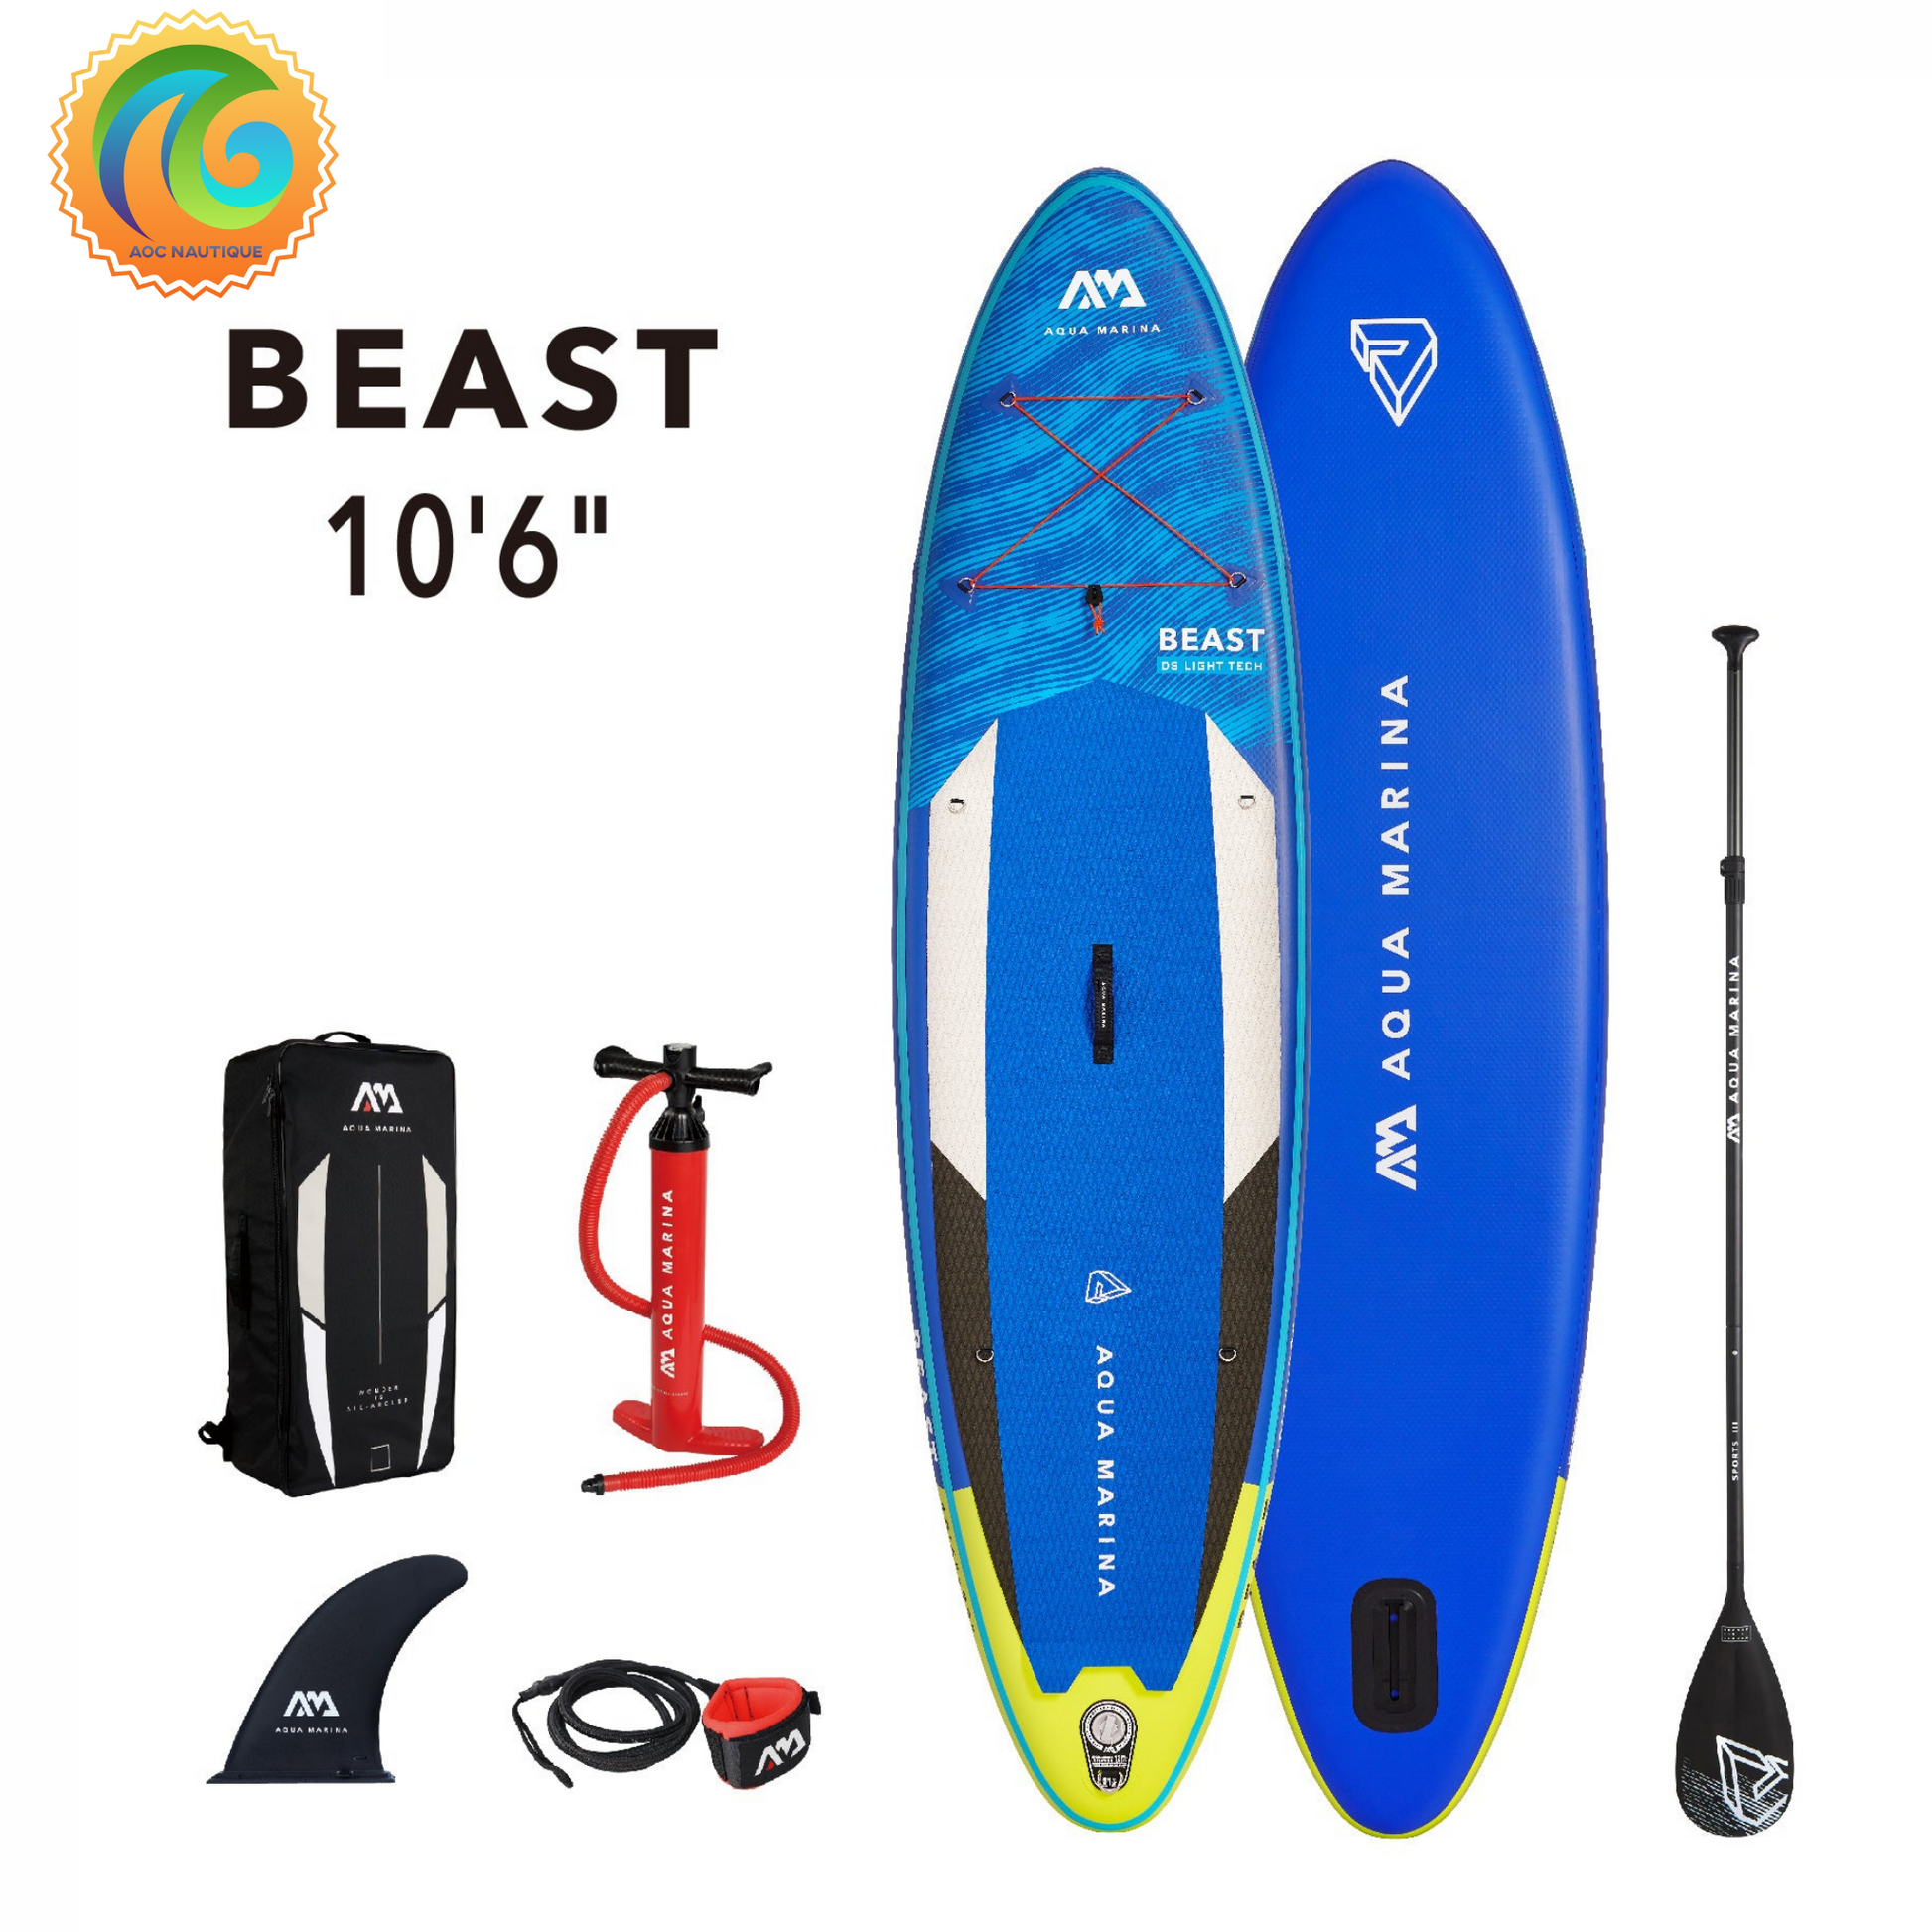 Achat et vente de Paddle board Aquamarina Beast # BT-21BEPincluant les accessoires.  